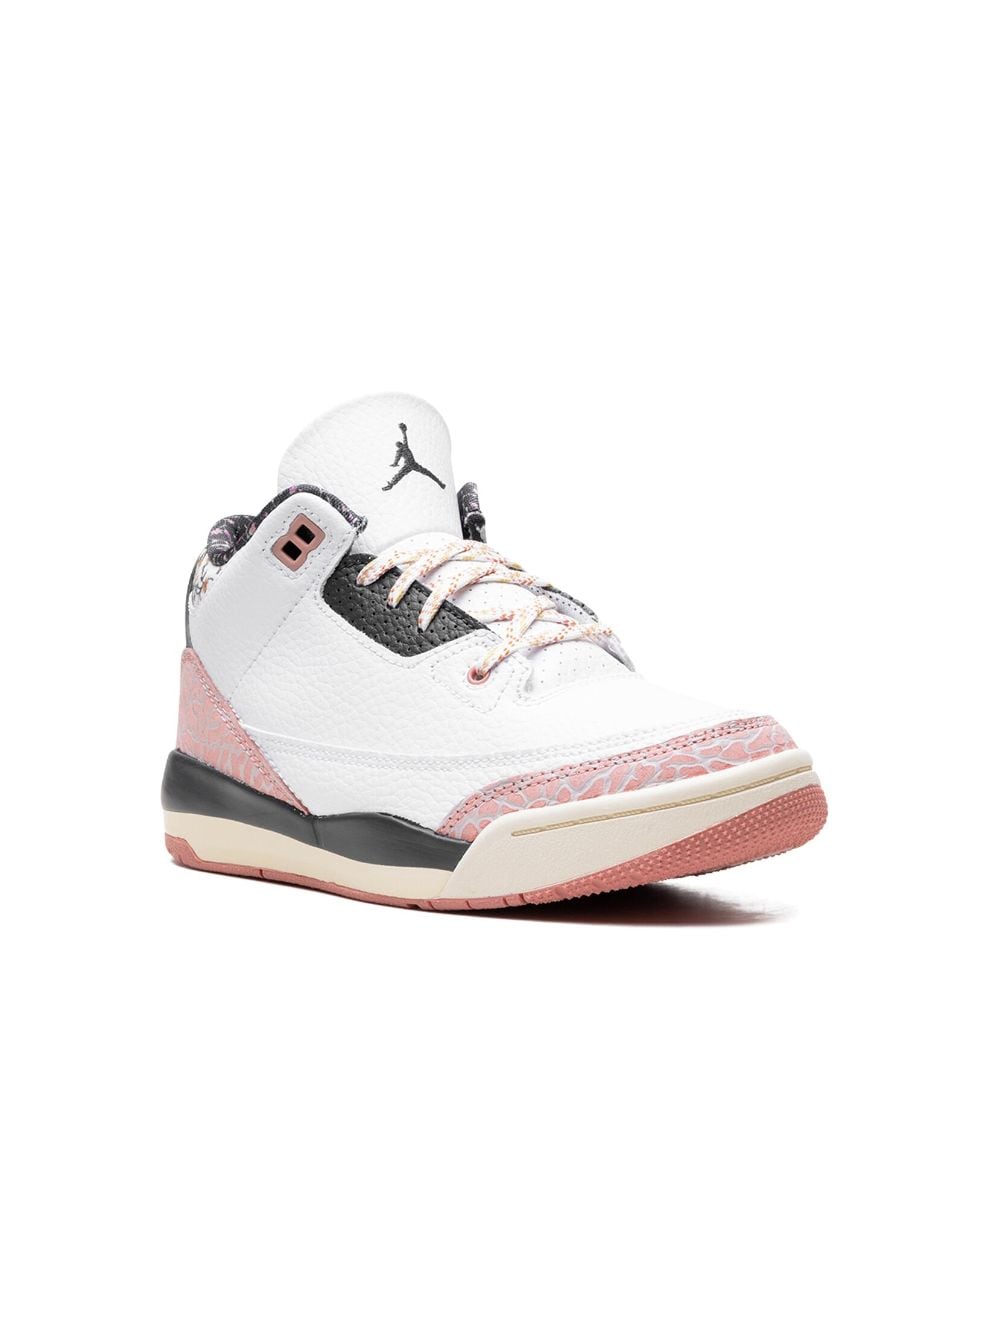 Jordan Kids Air Jordan 3 "White Red Stardust" sneakers